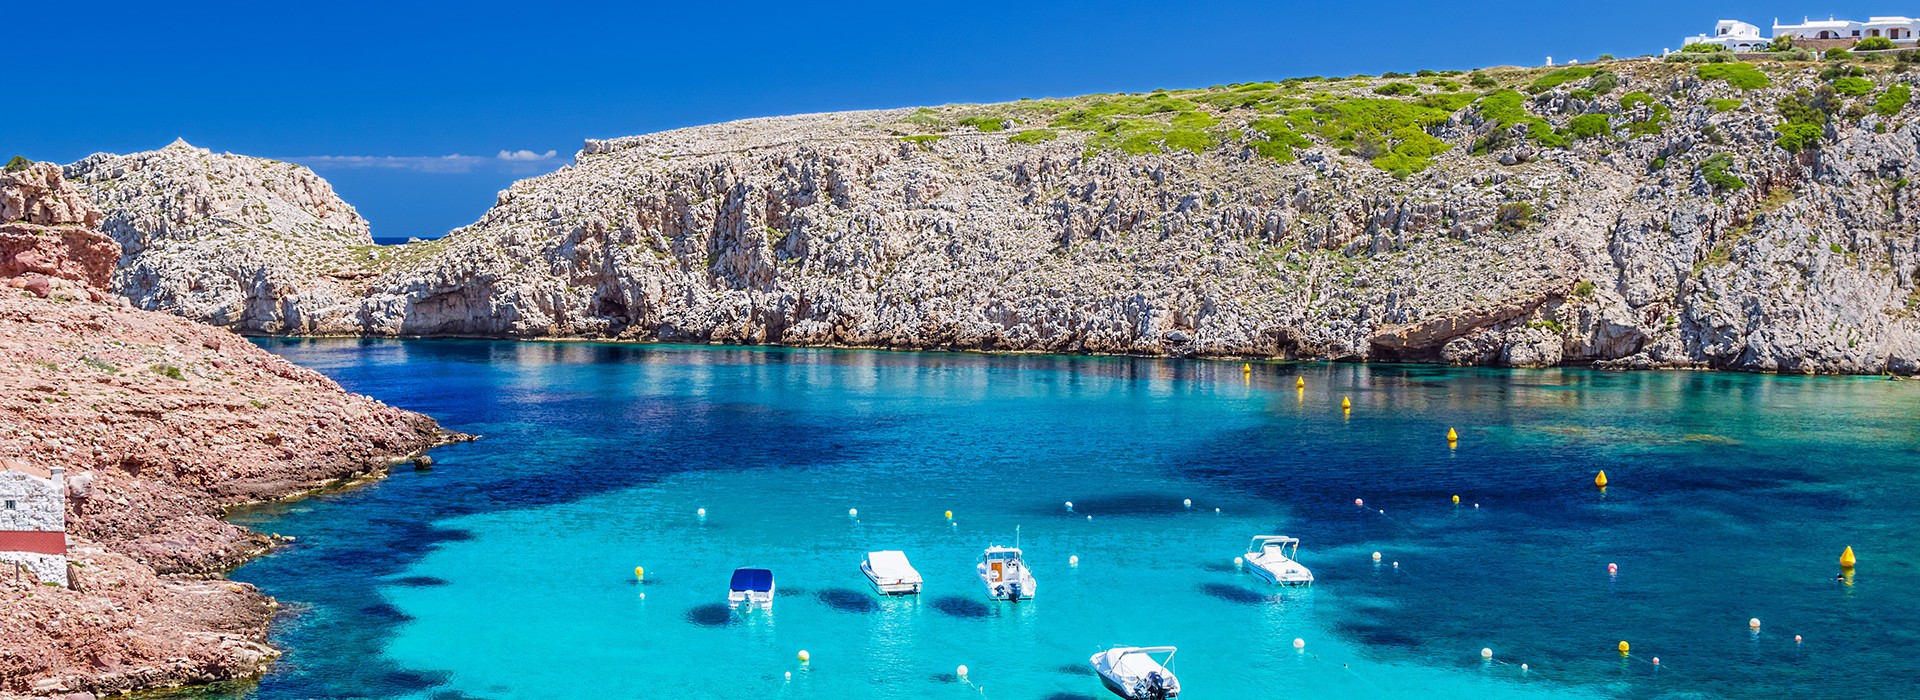 Balearic Islands - Spain